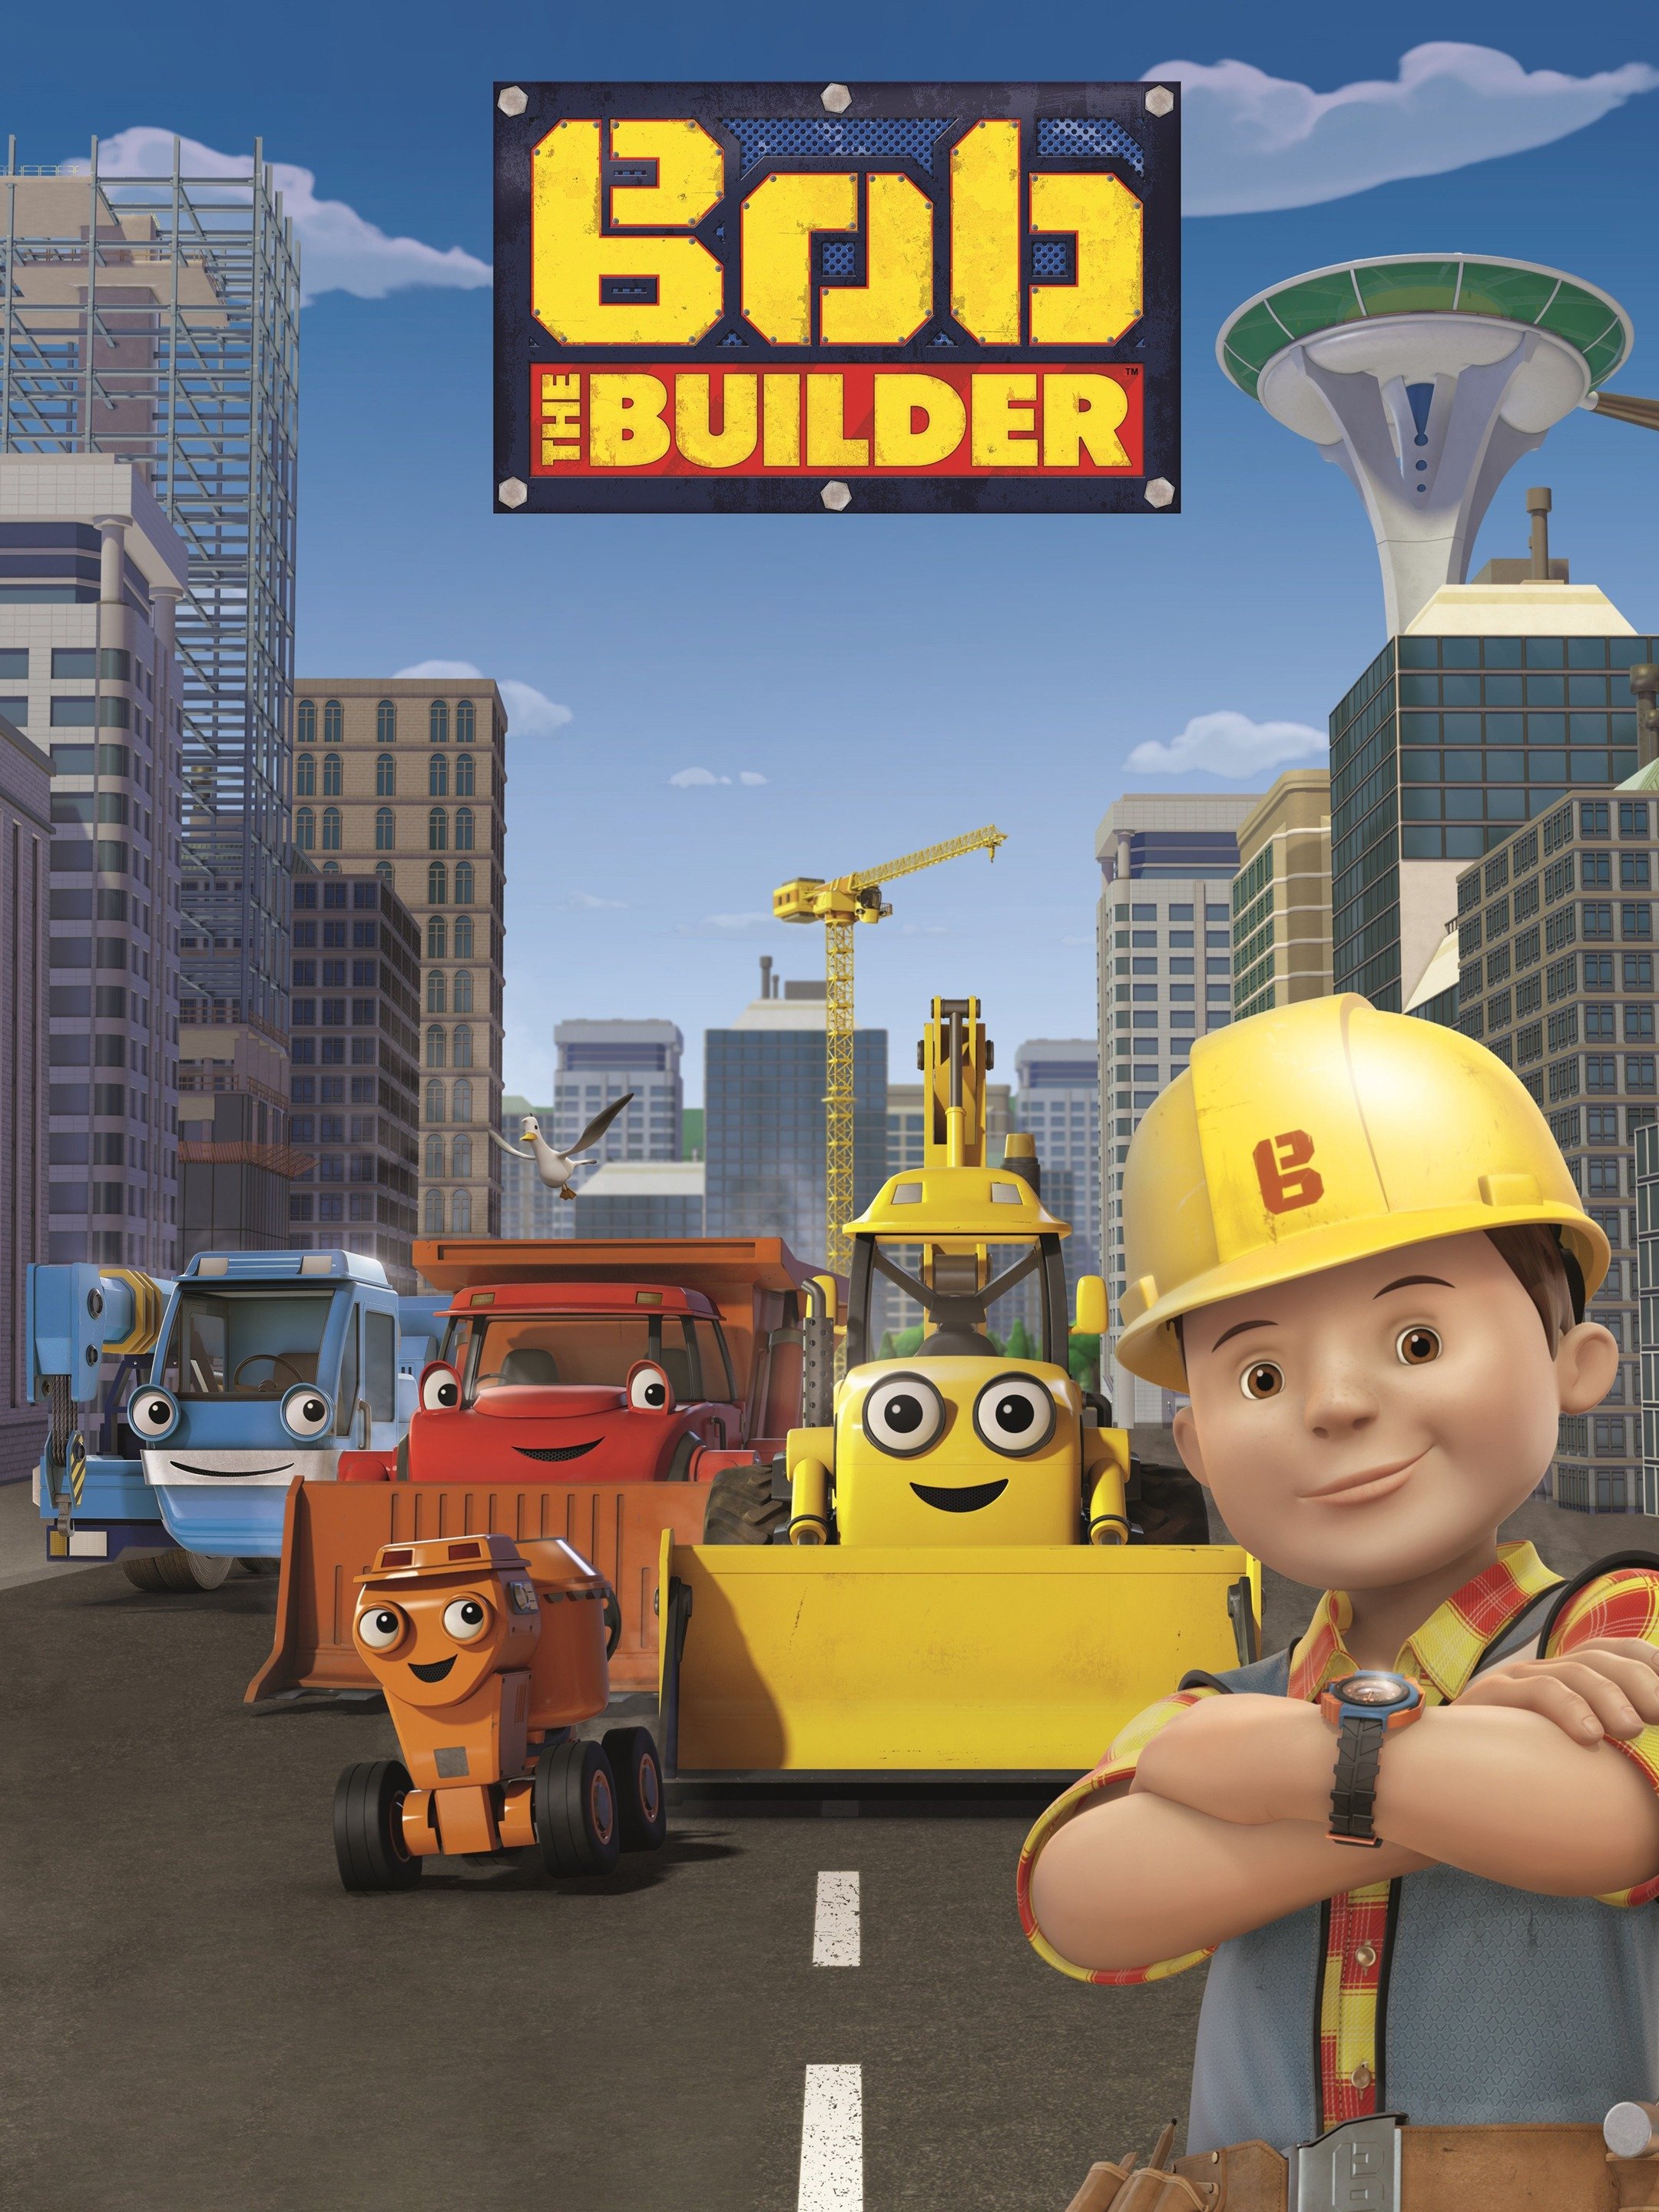 Bob the Builder: Project Build It.